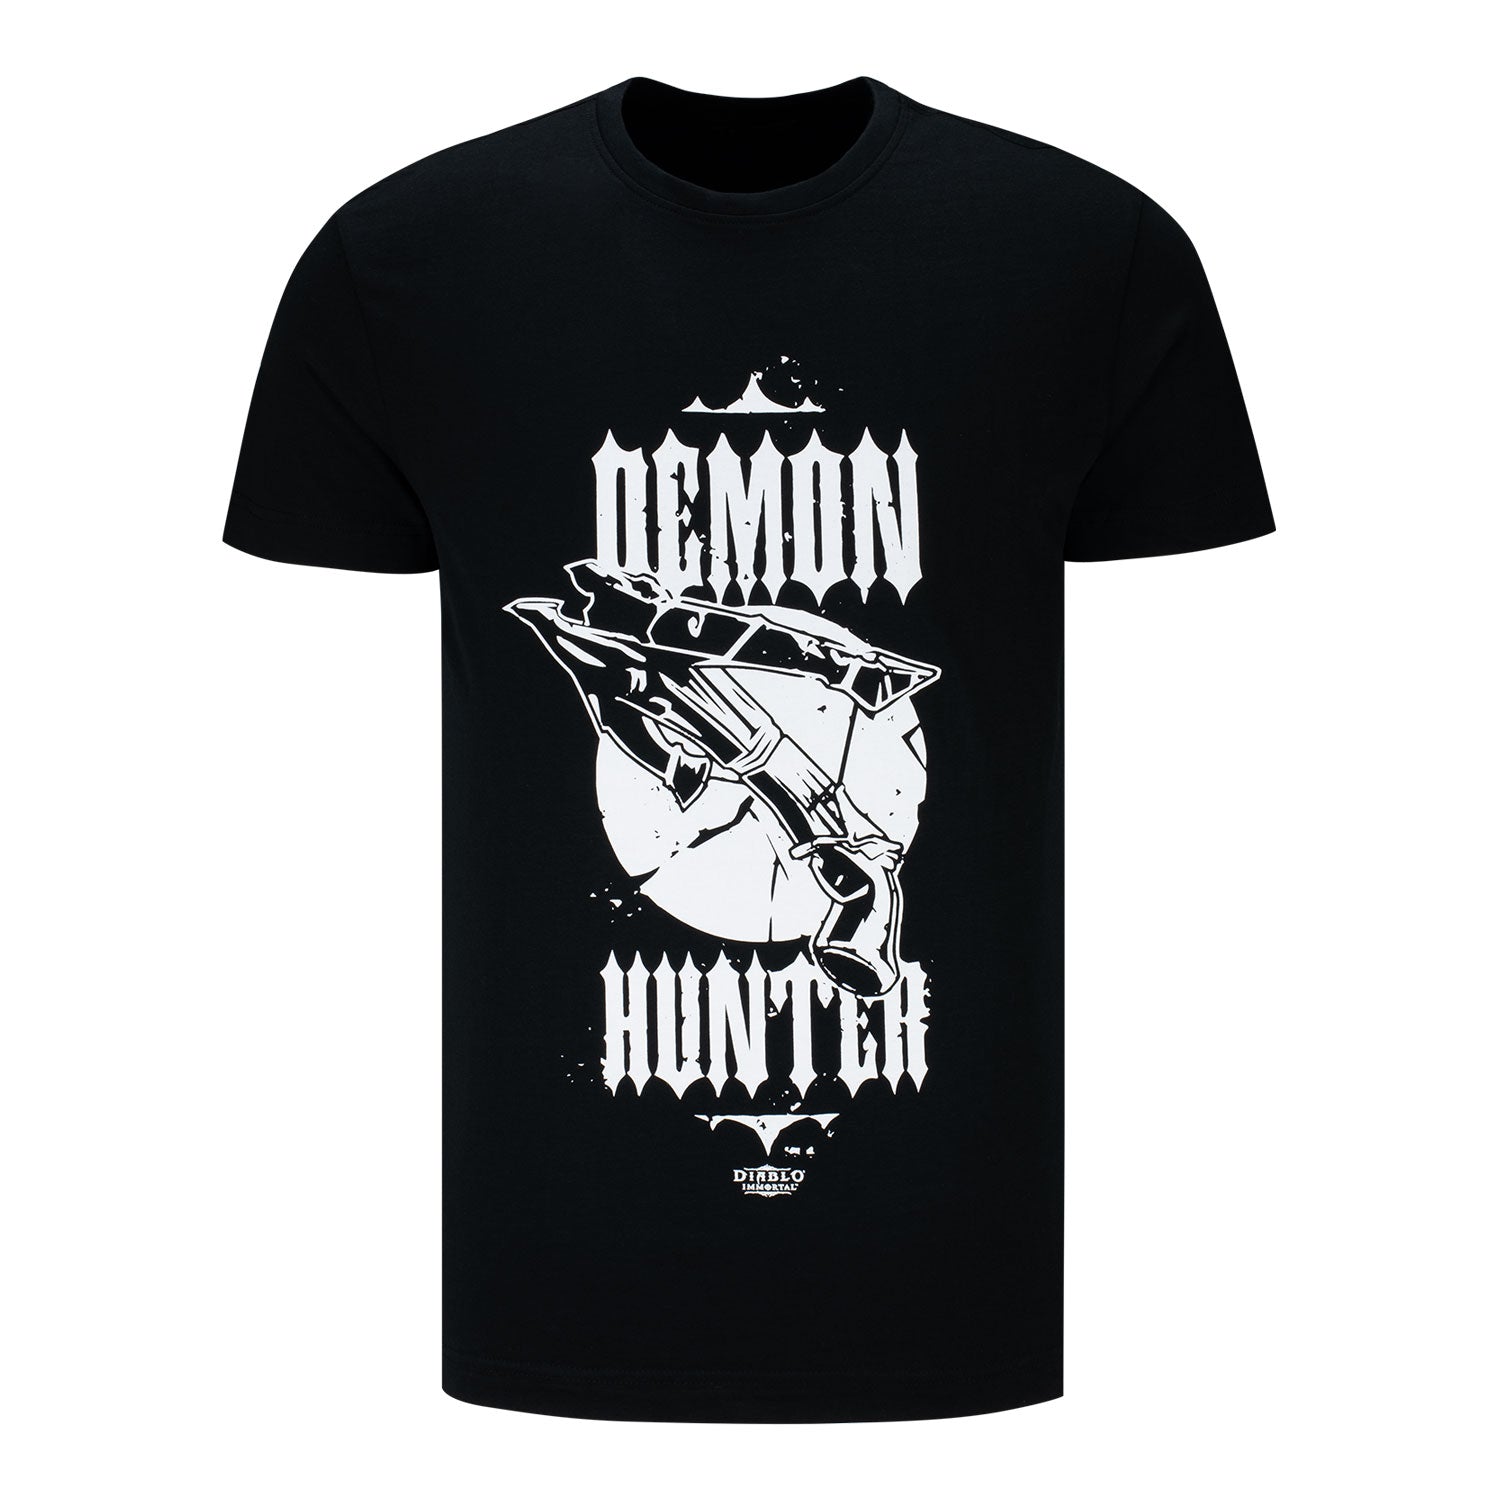 Diablo Demon Hunter Black T-Shirt - Front View